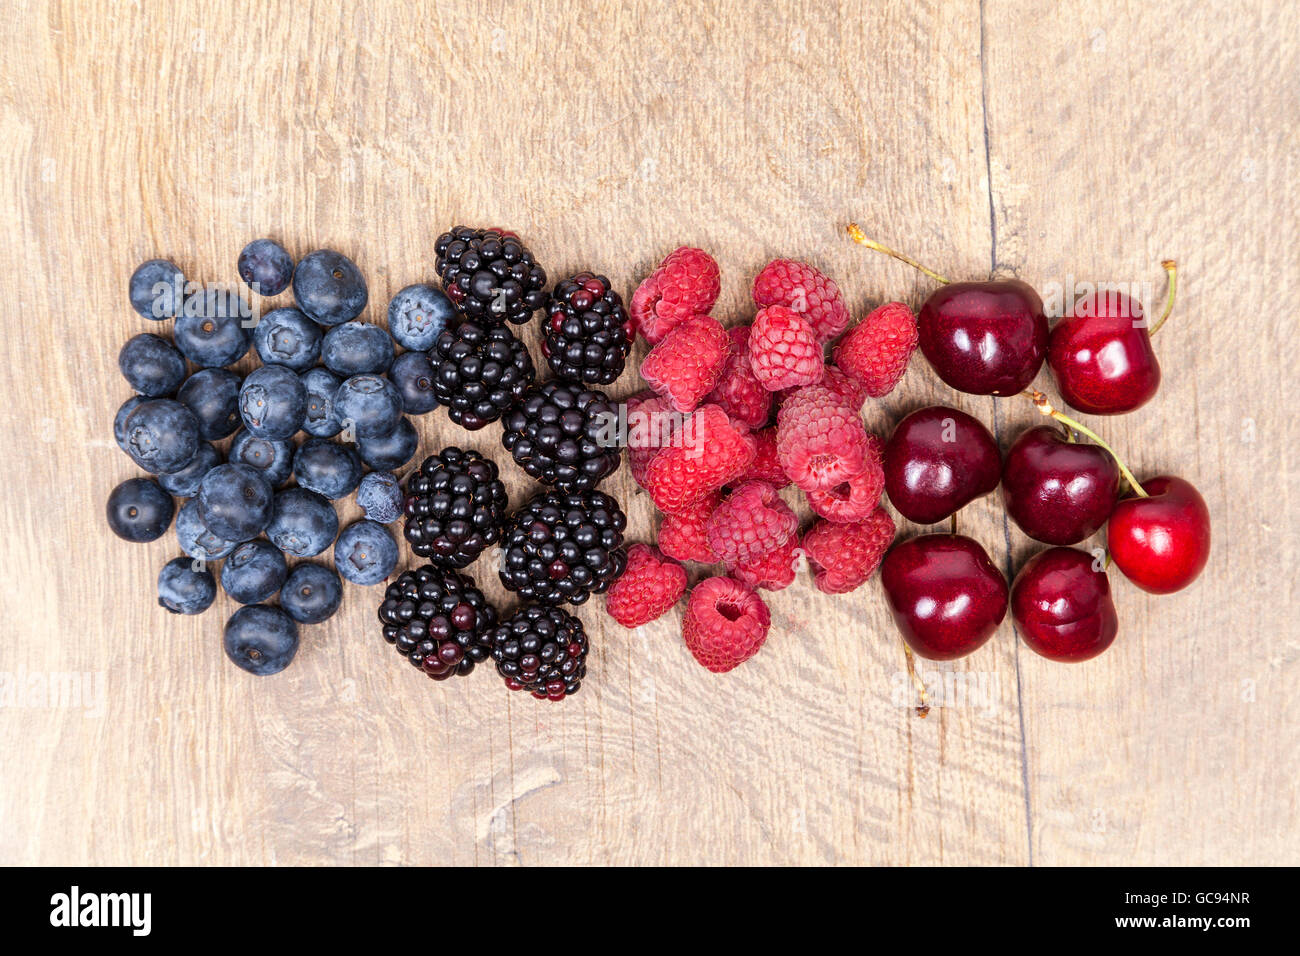 Blueberry, raspberry, blackberry and cherry fruits Stock Photo